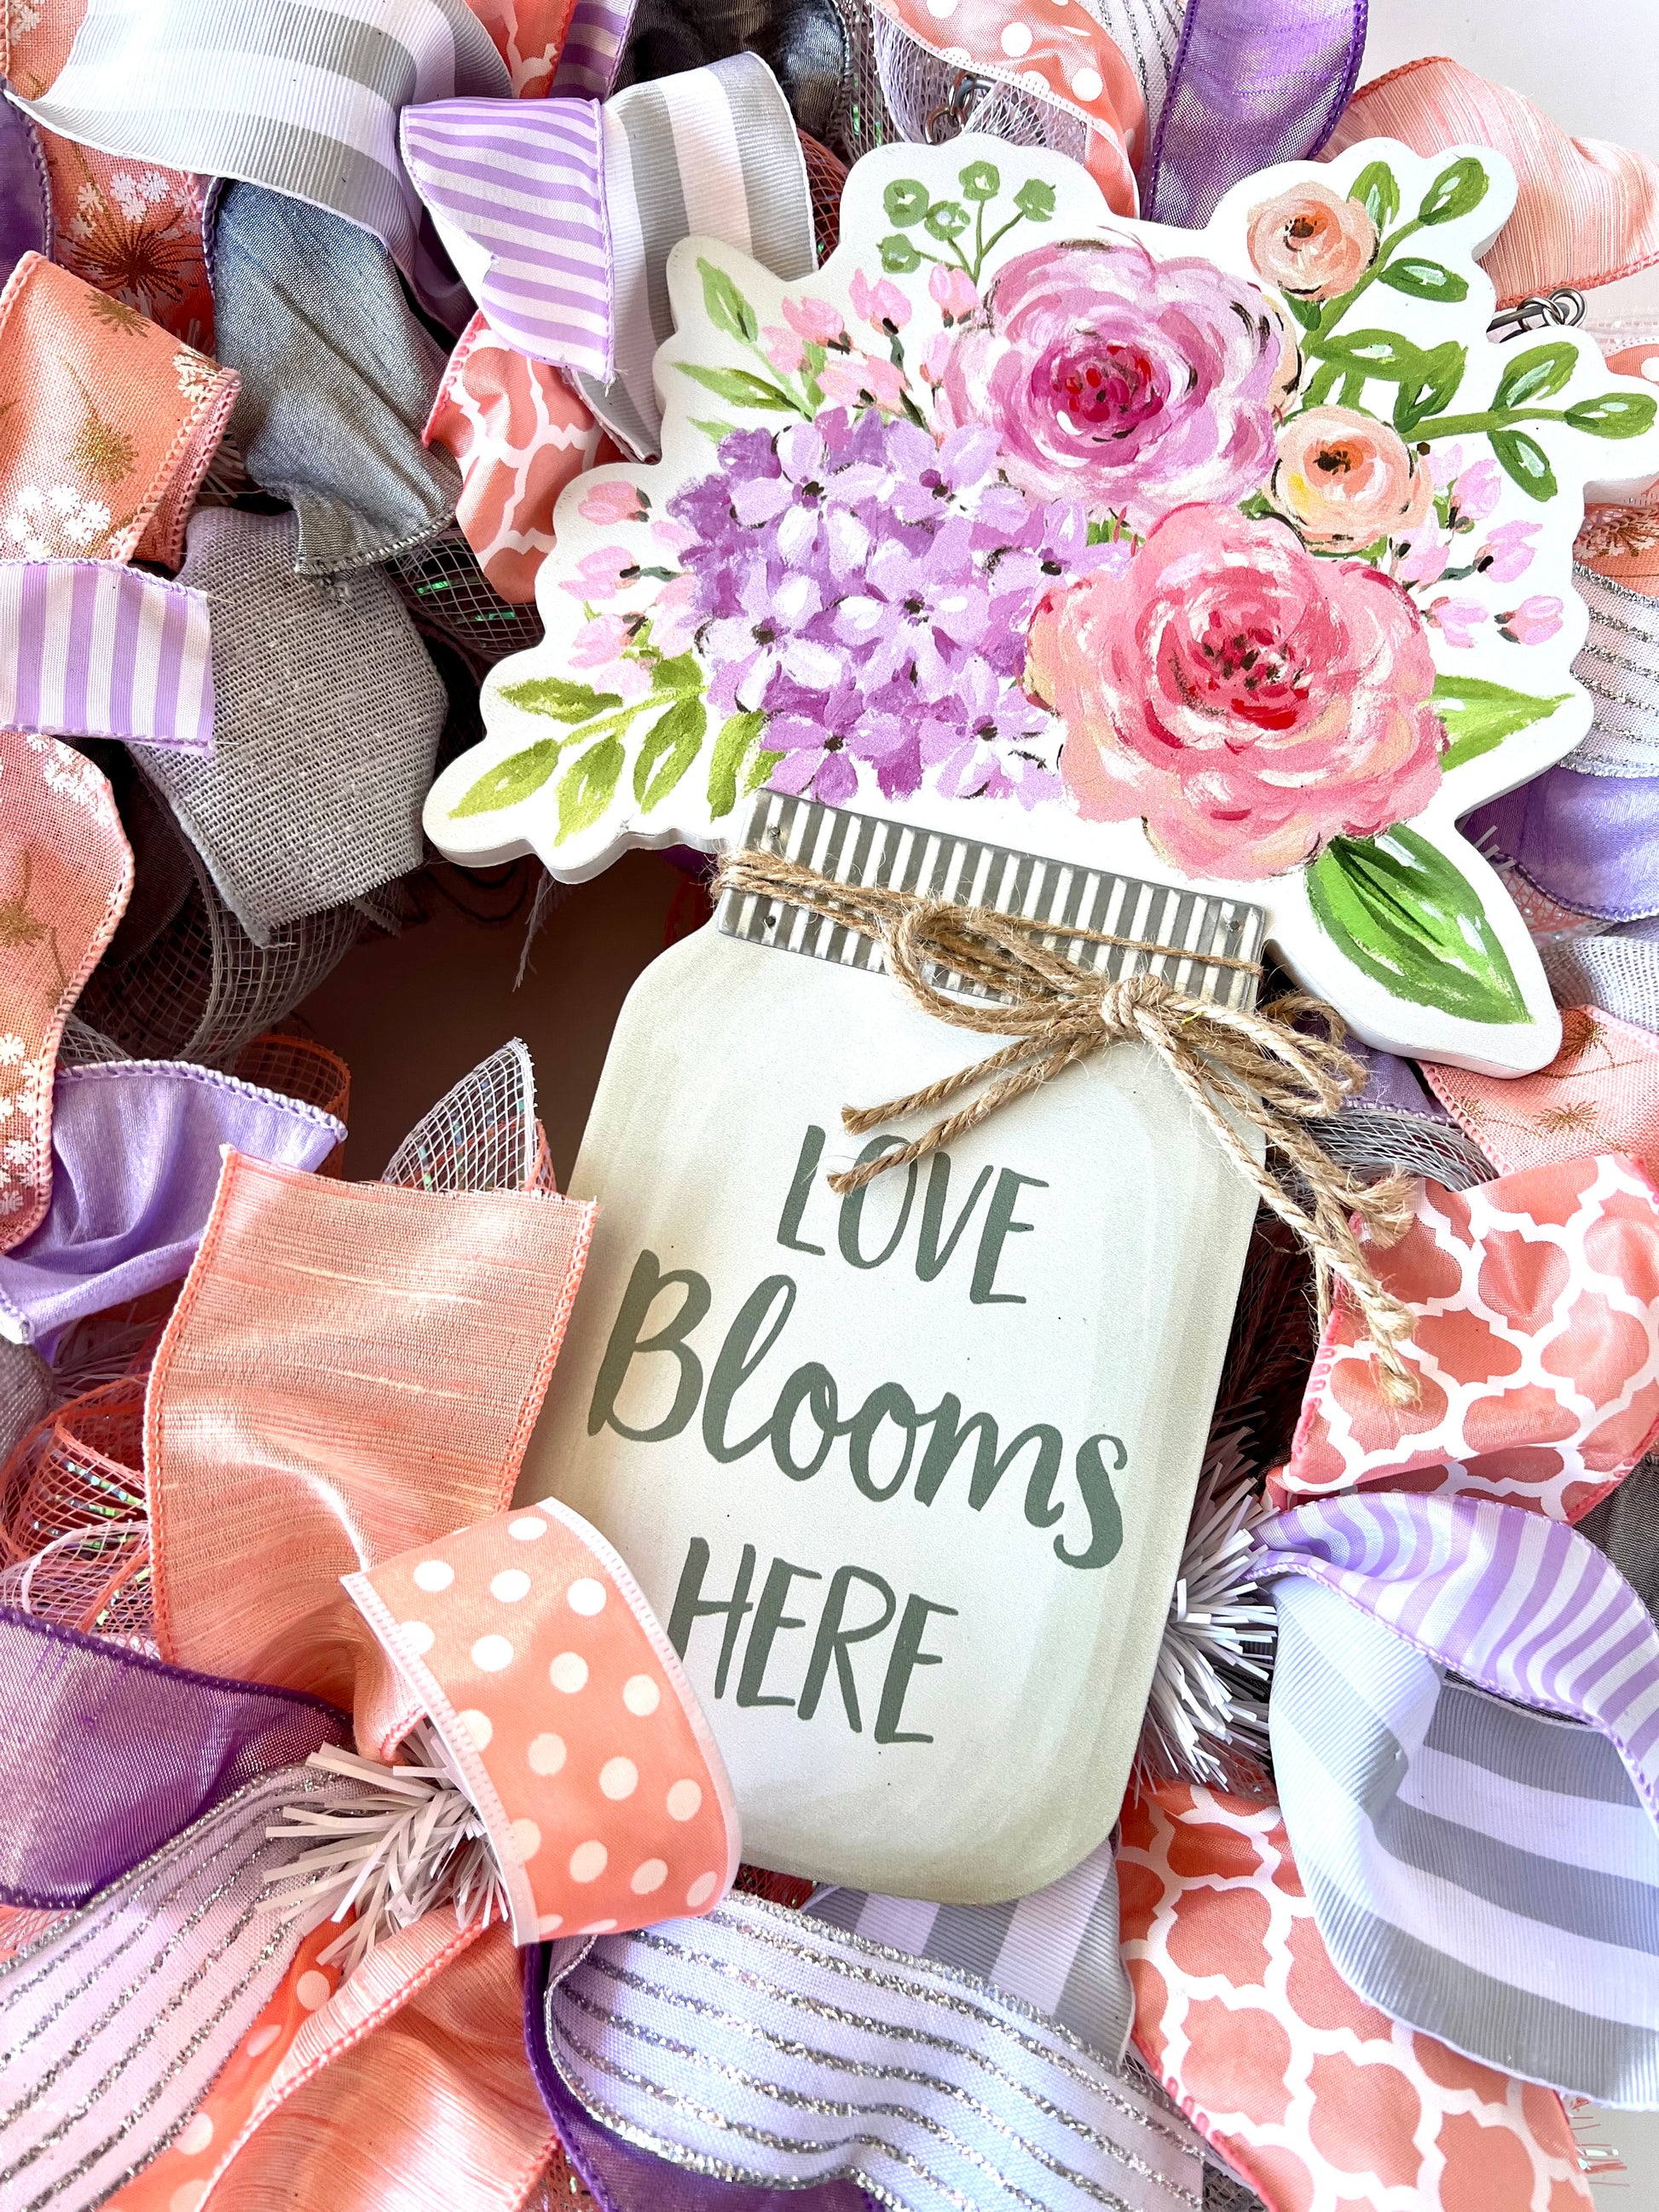 Spring Mesh Wreath | Love Blooms Here - Designer DIY